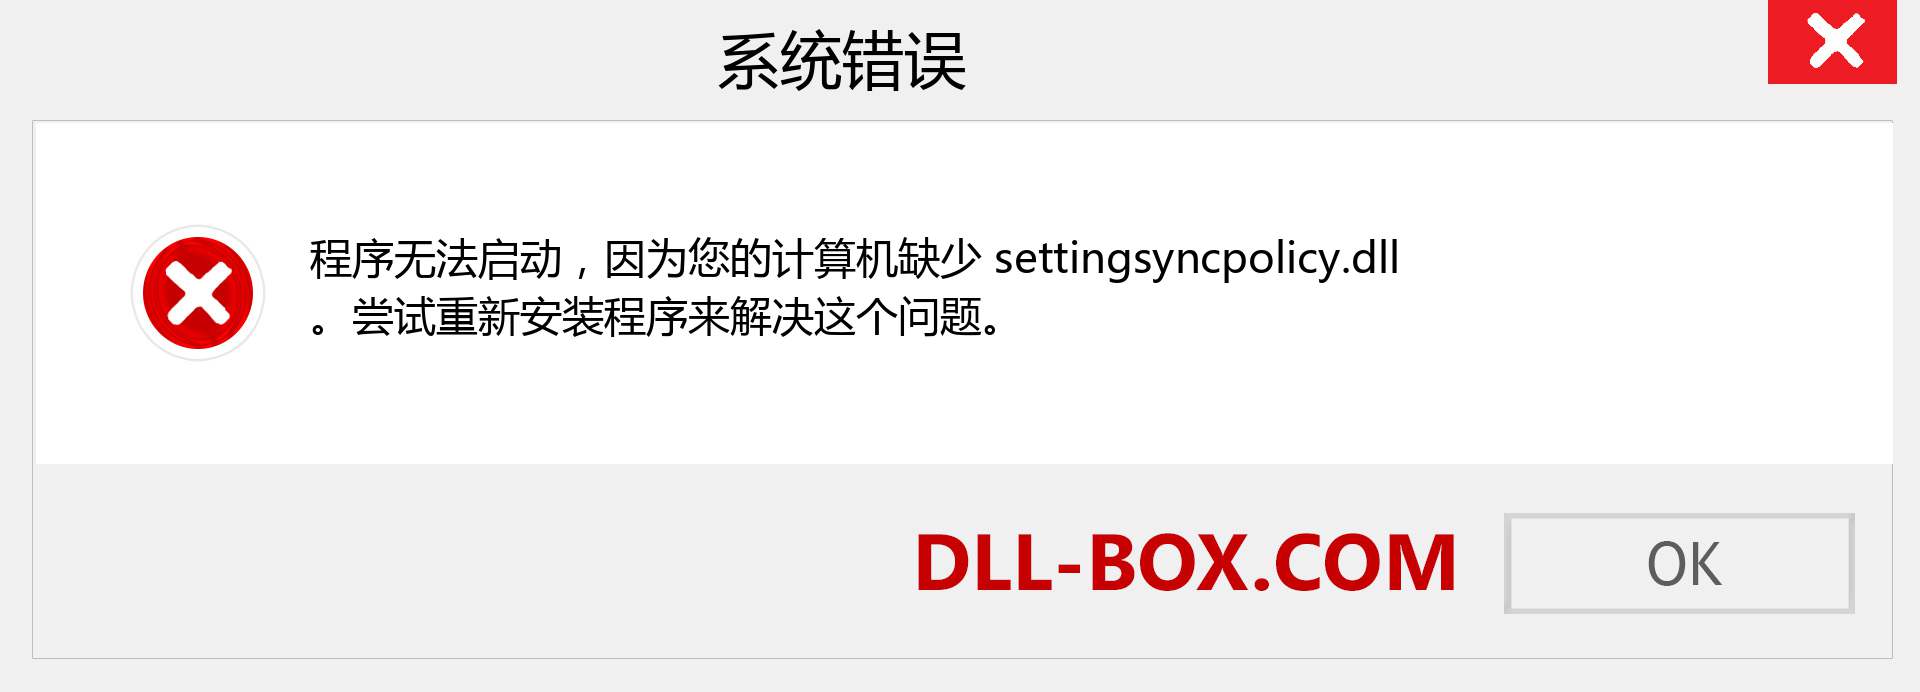 settingsyncpolicy.dll 文件丢失？。 适用于 Windows 7、8、10 的下载 - 修复 Windows、照片、图像上的 settingsyncpolicy dll 丢失错误